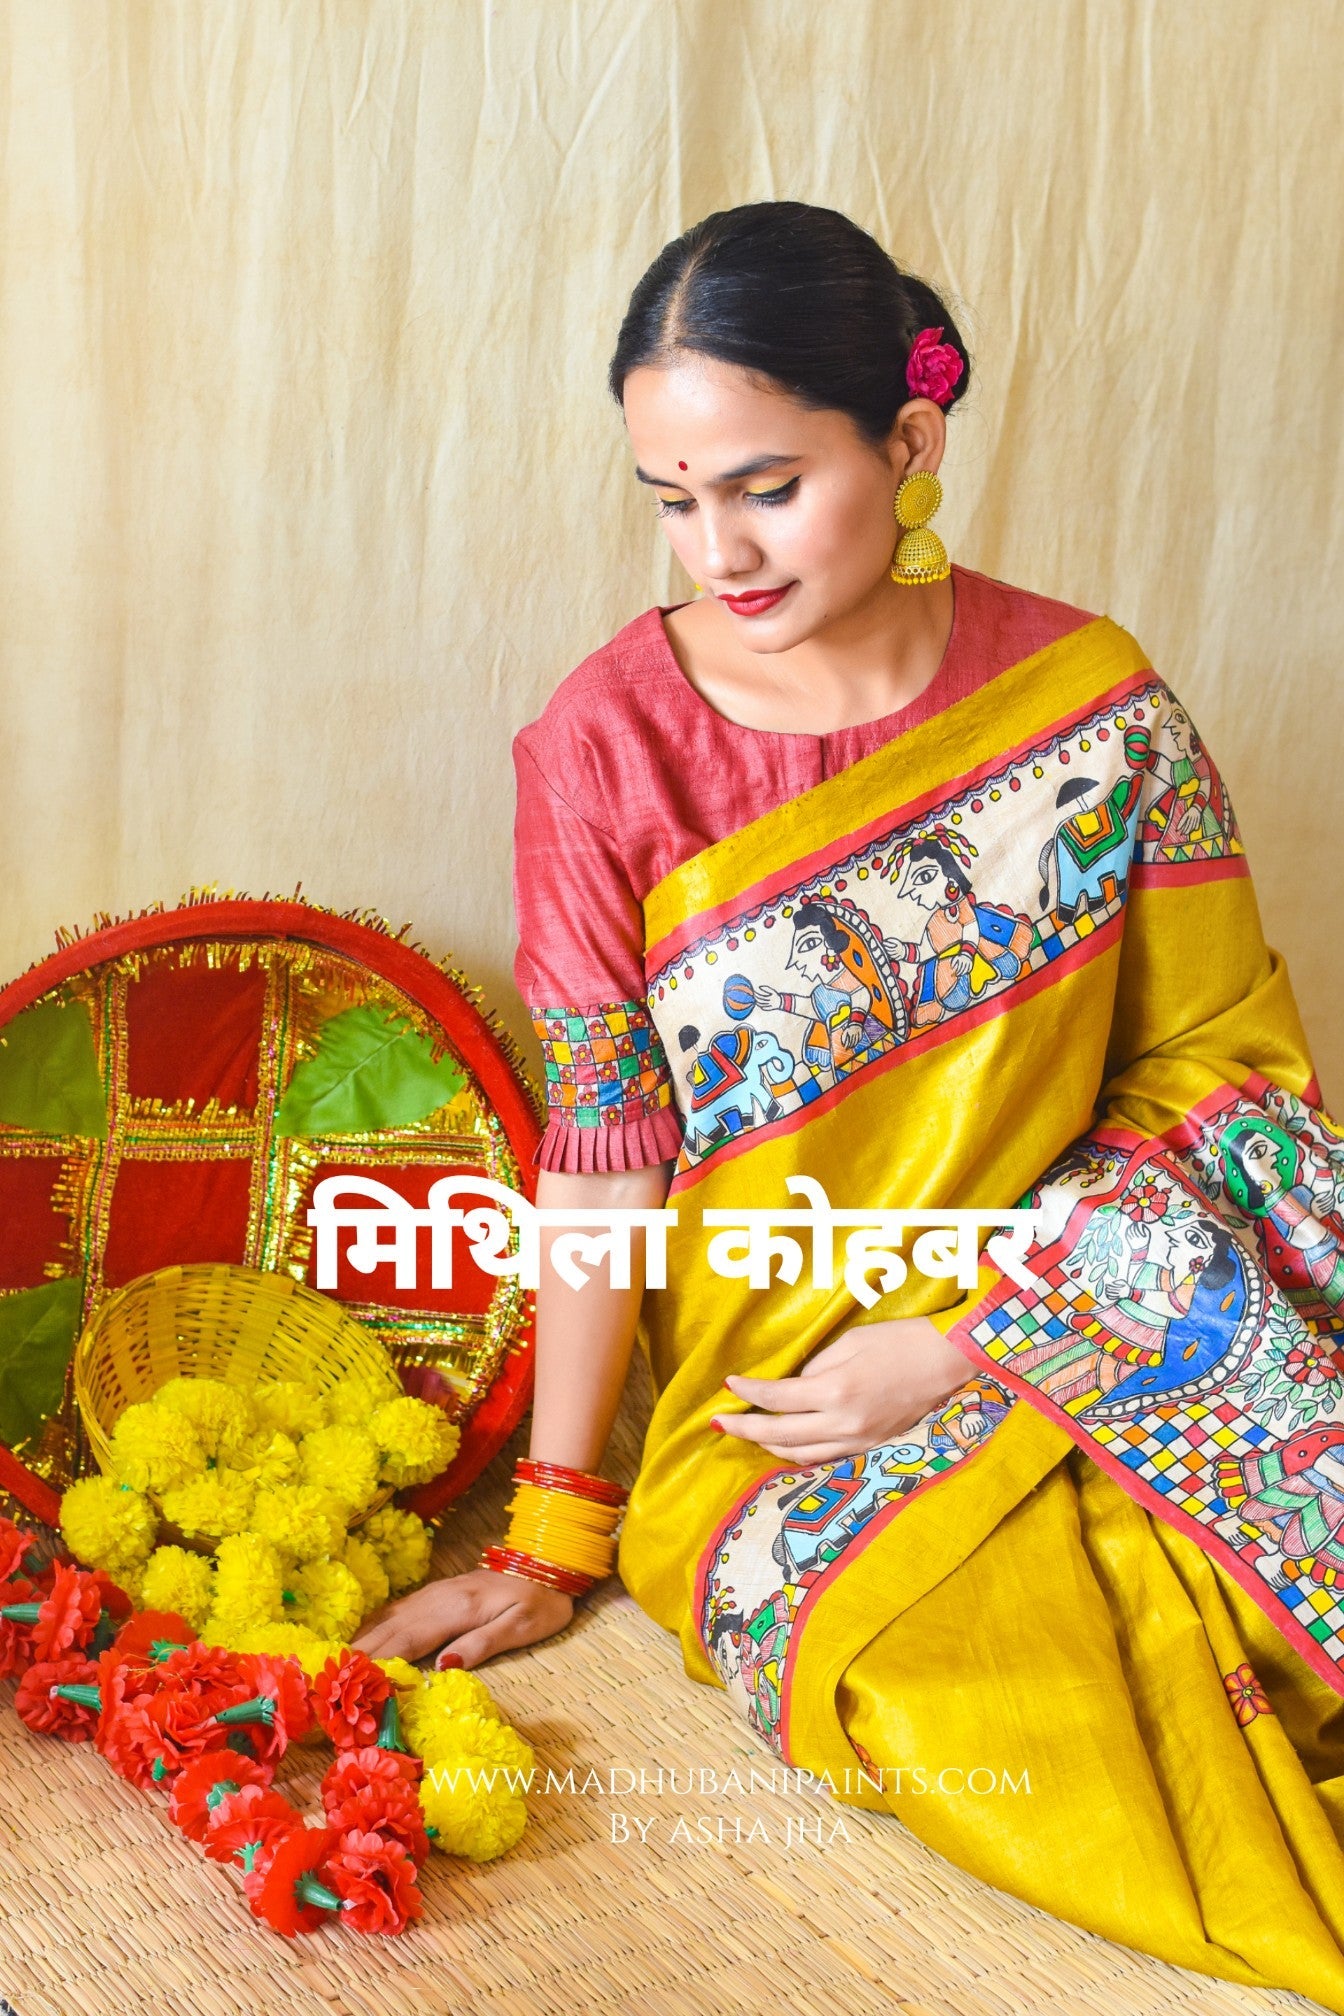 MITHILA KOHBAR" Hand Painted Madhubani Tussar Silk Blouse